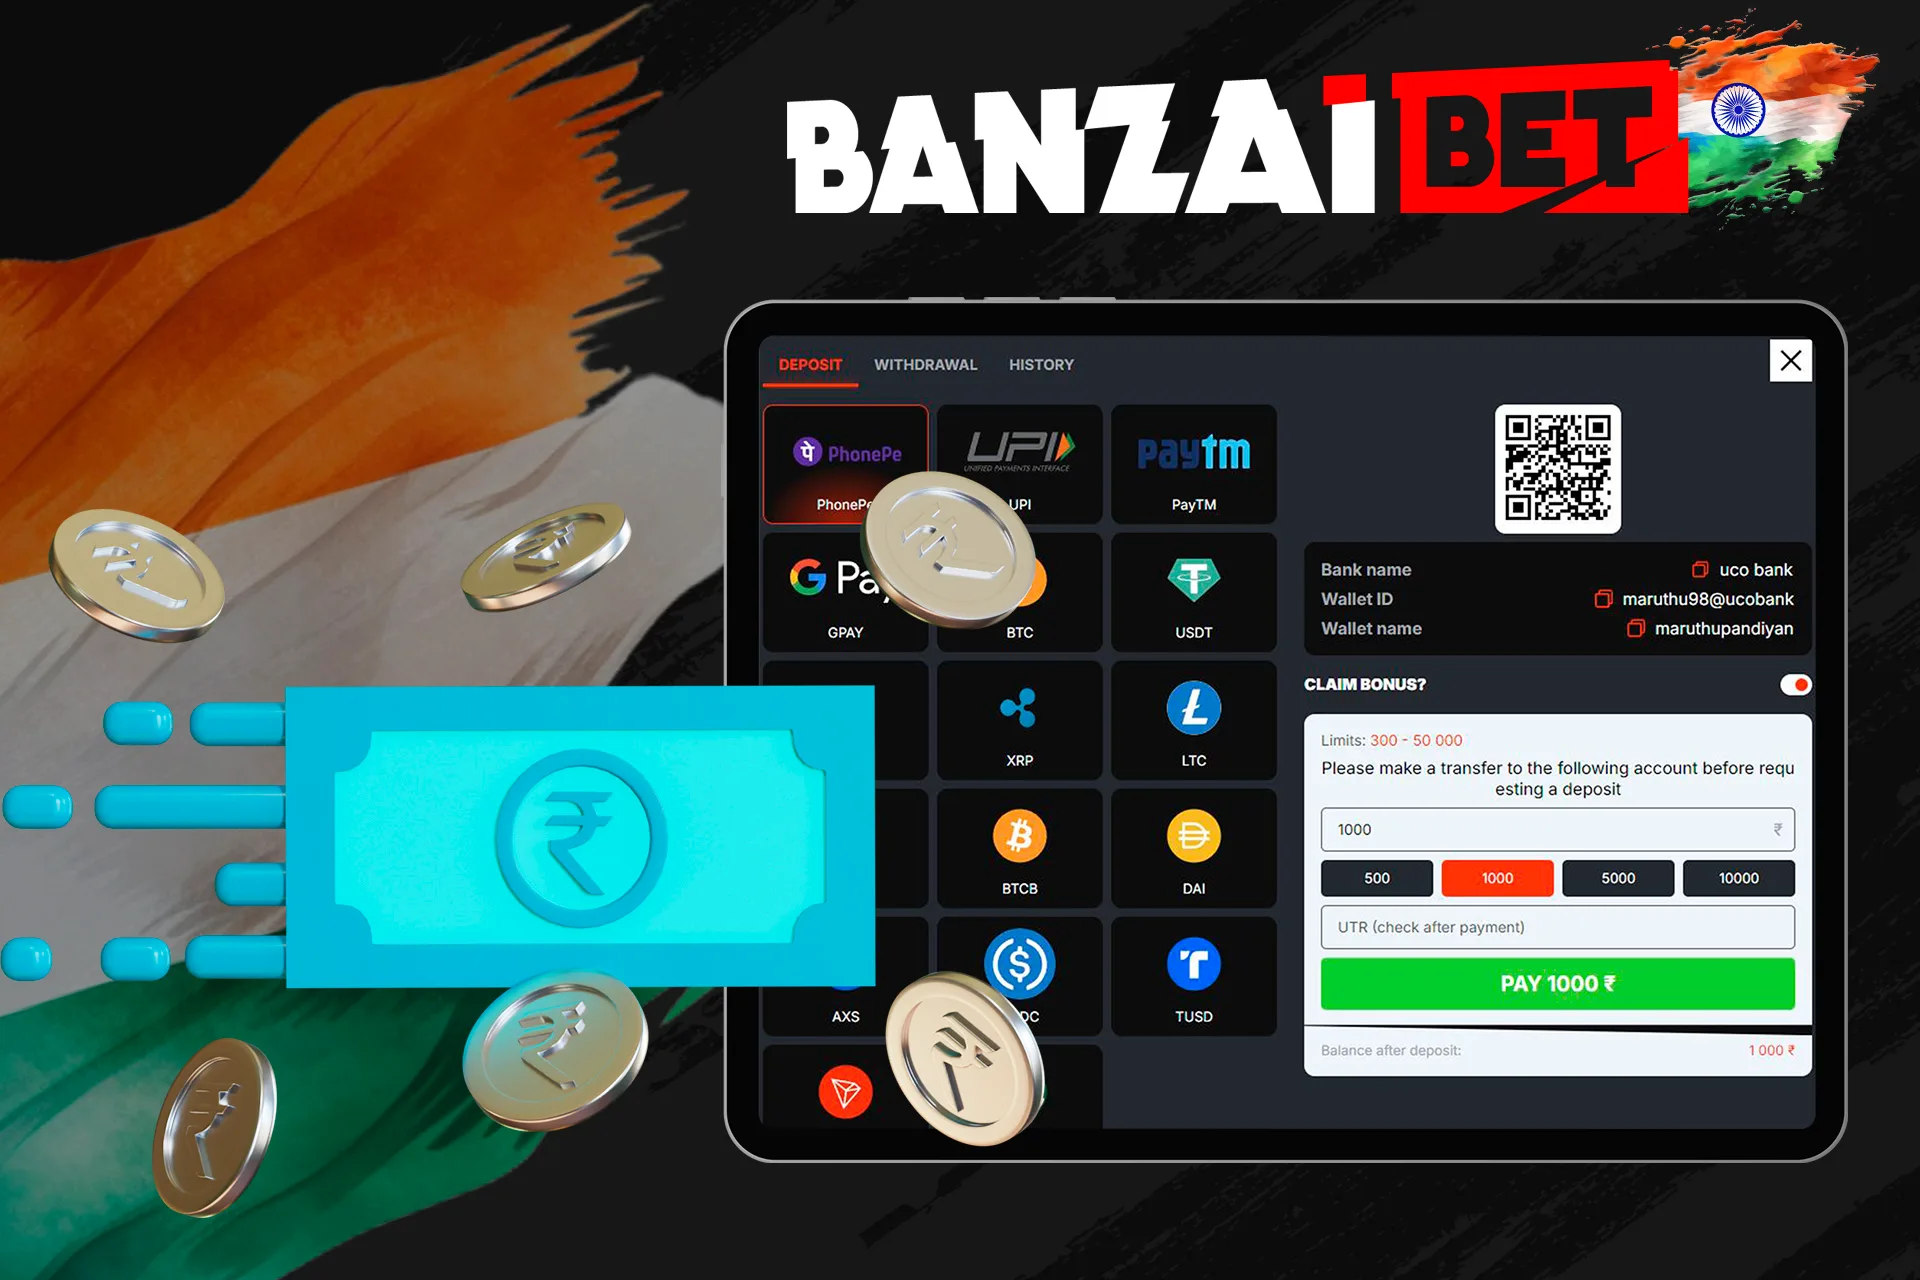 Make your first deposit at Banzaibet India